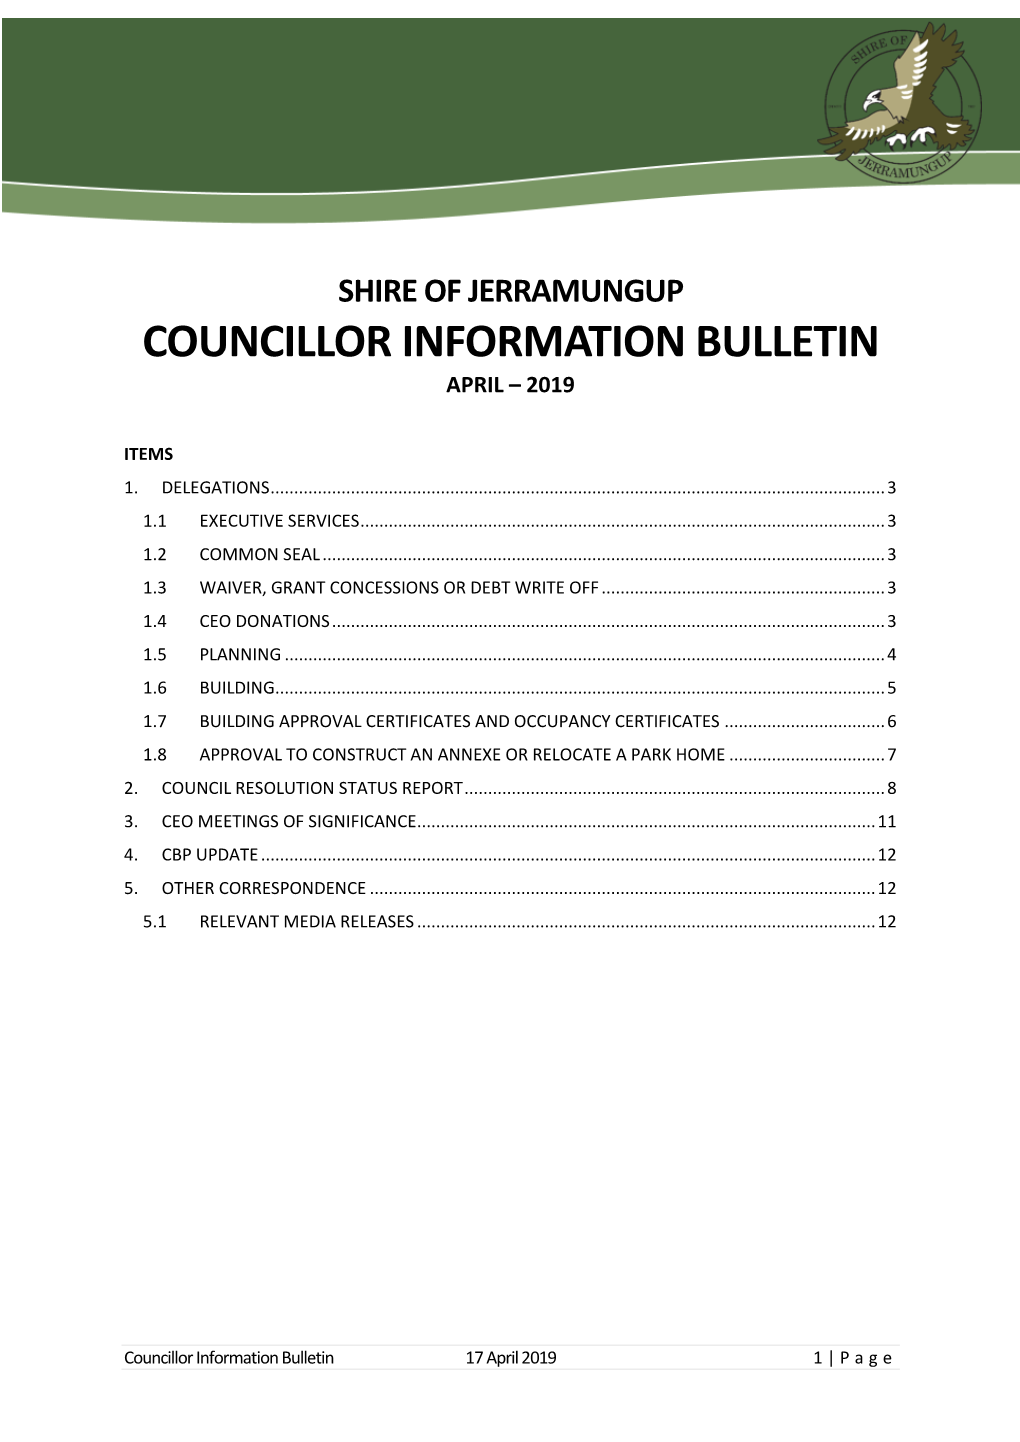 Councillor Information Bulletin April – 2019